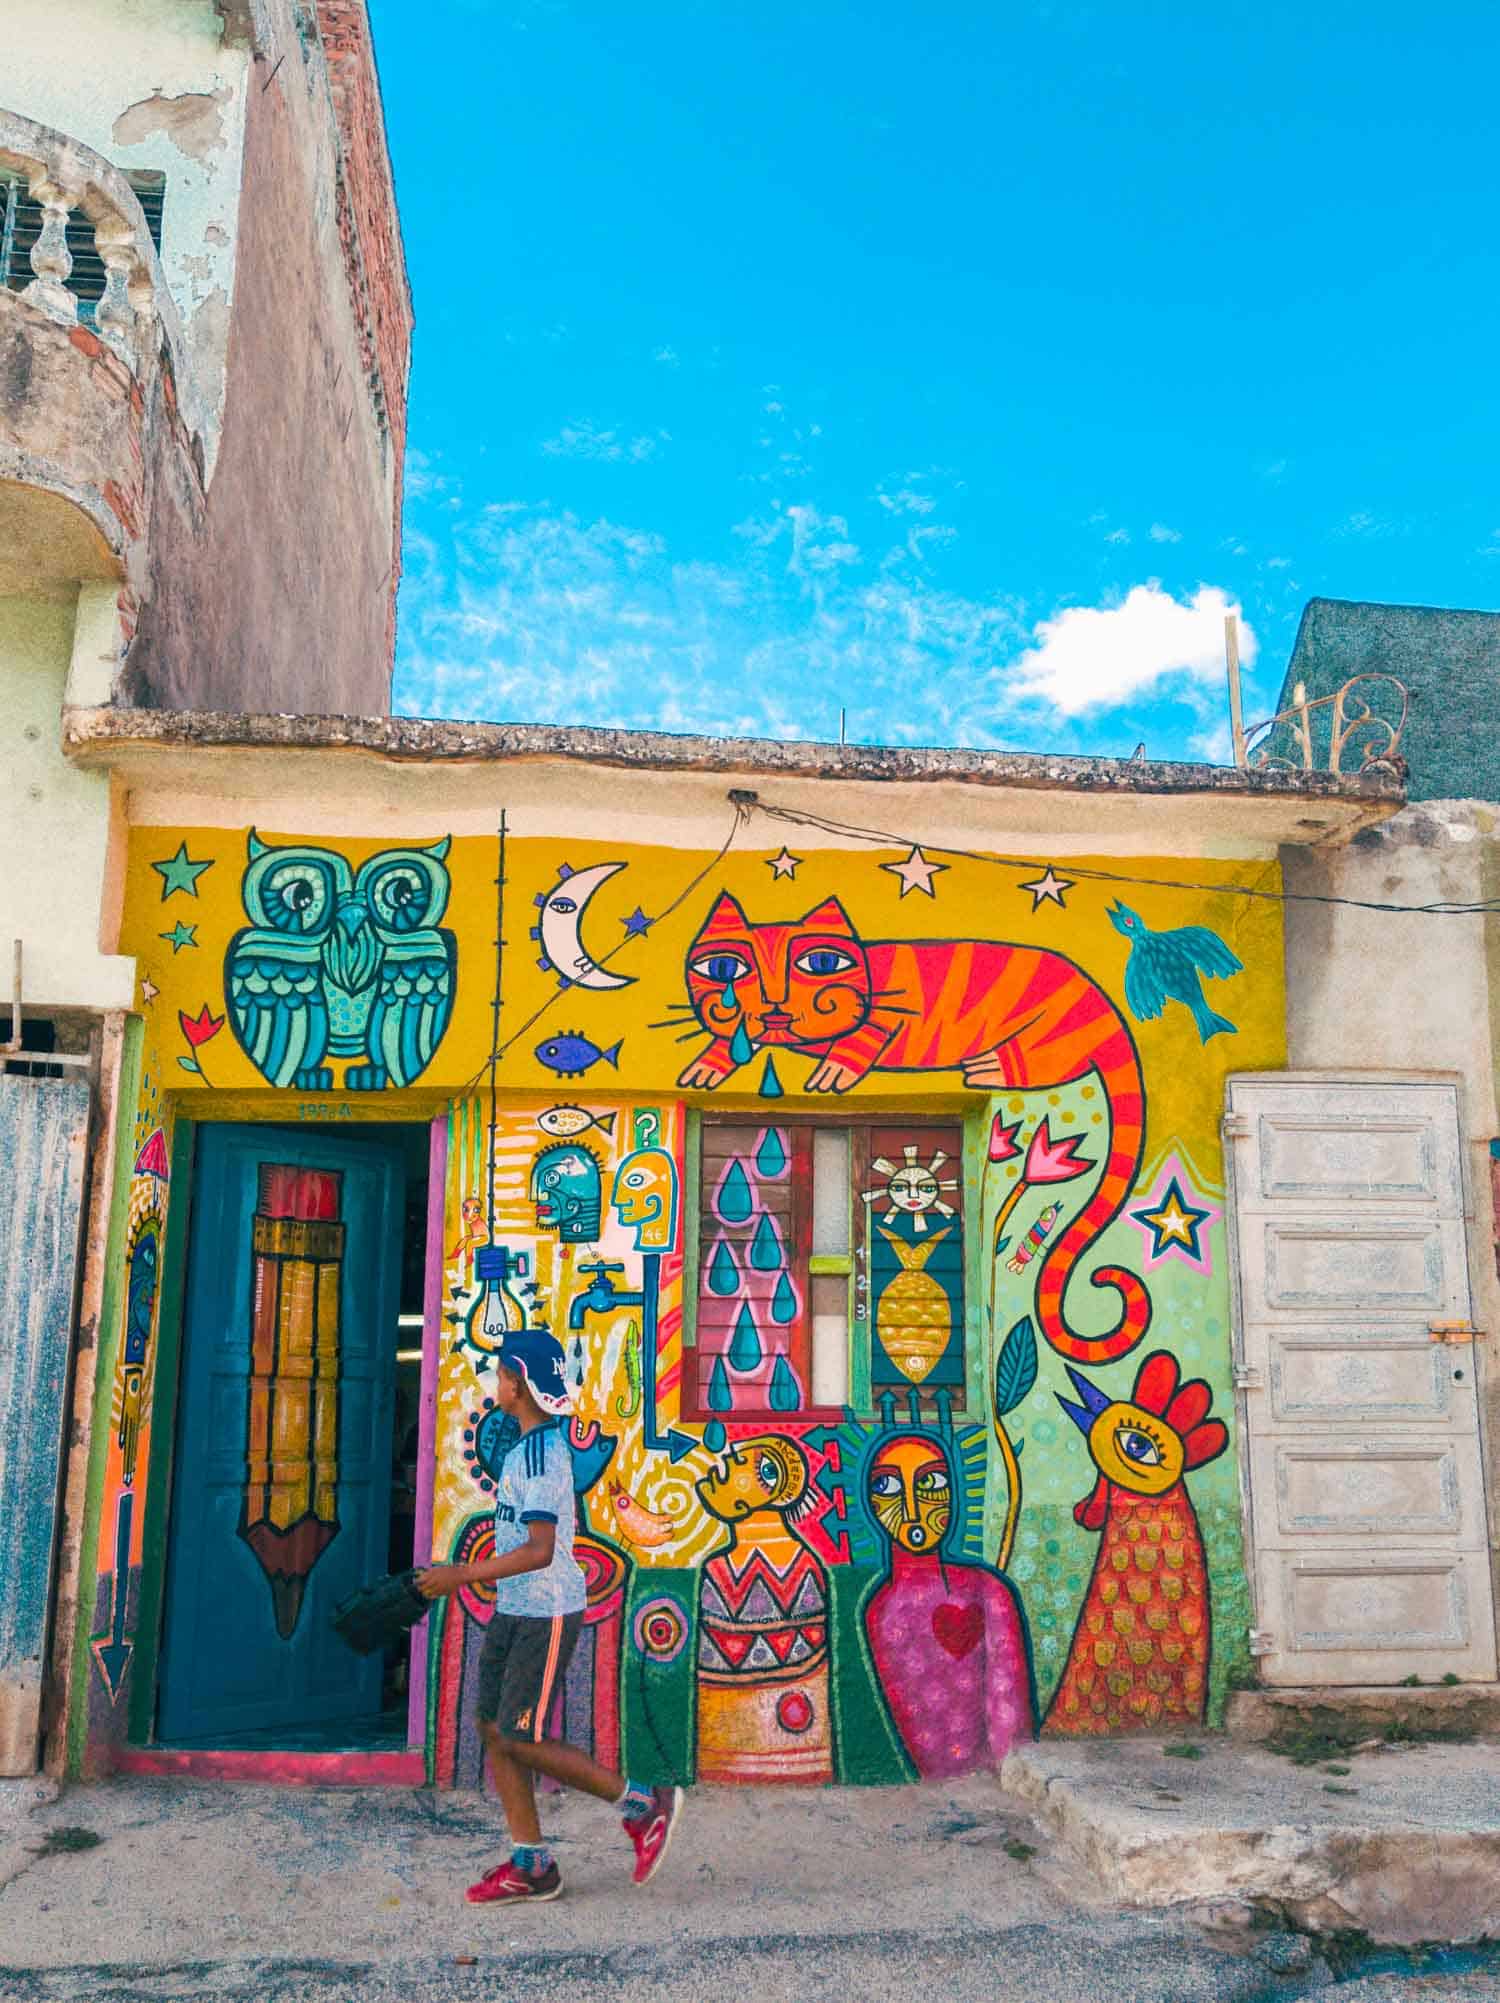 Trinidad Cuba art community neighbourhood.